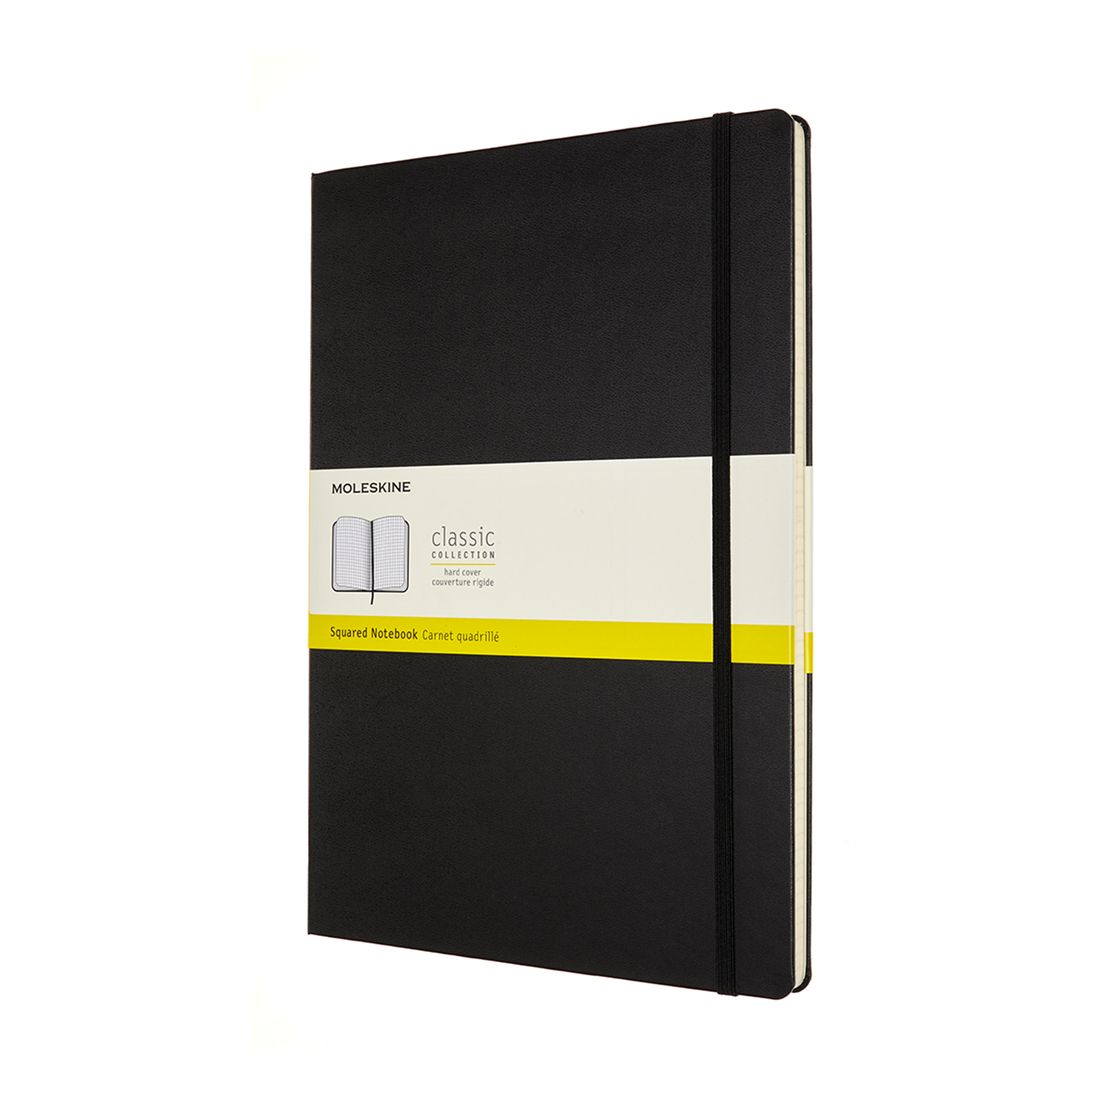 Moleskine Squared A4 Hard Notebook - Black